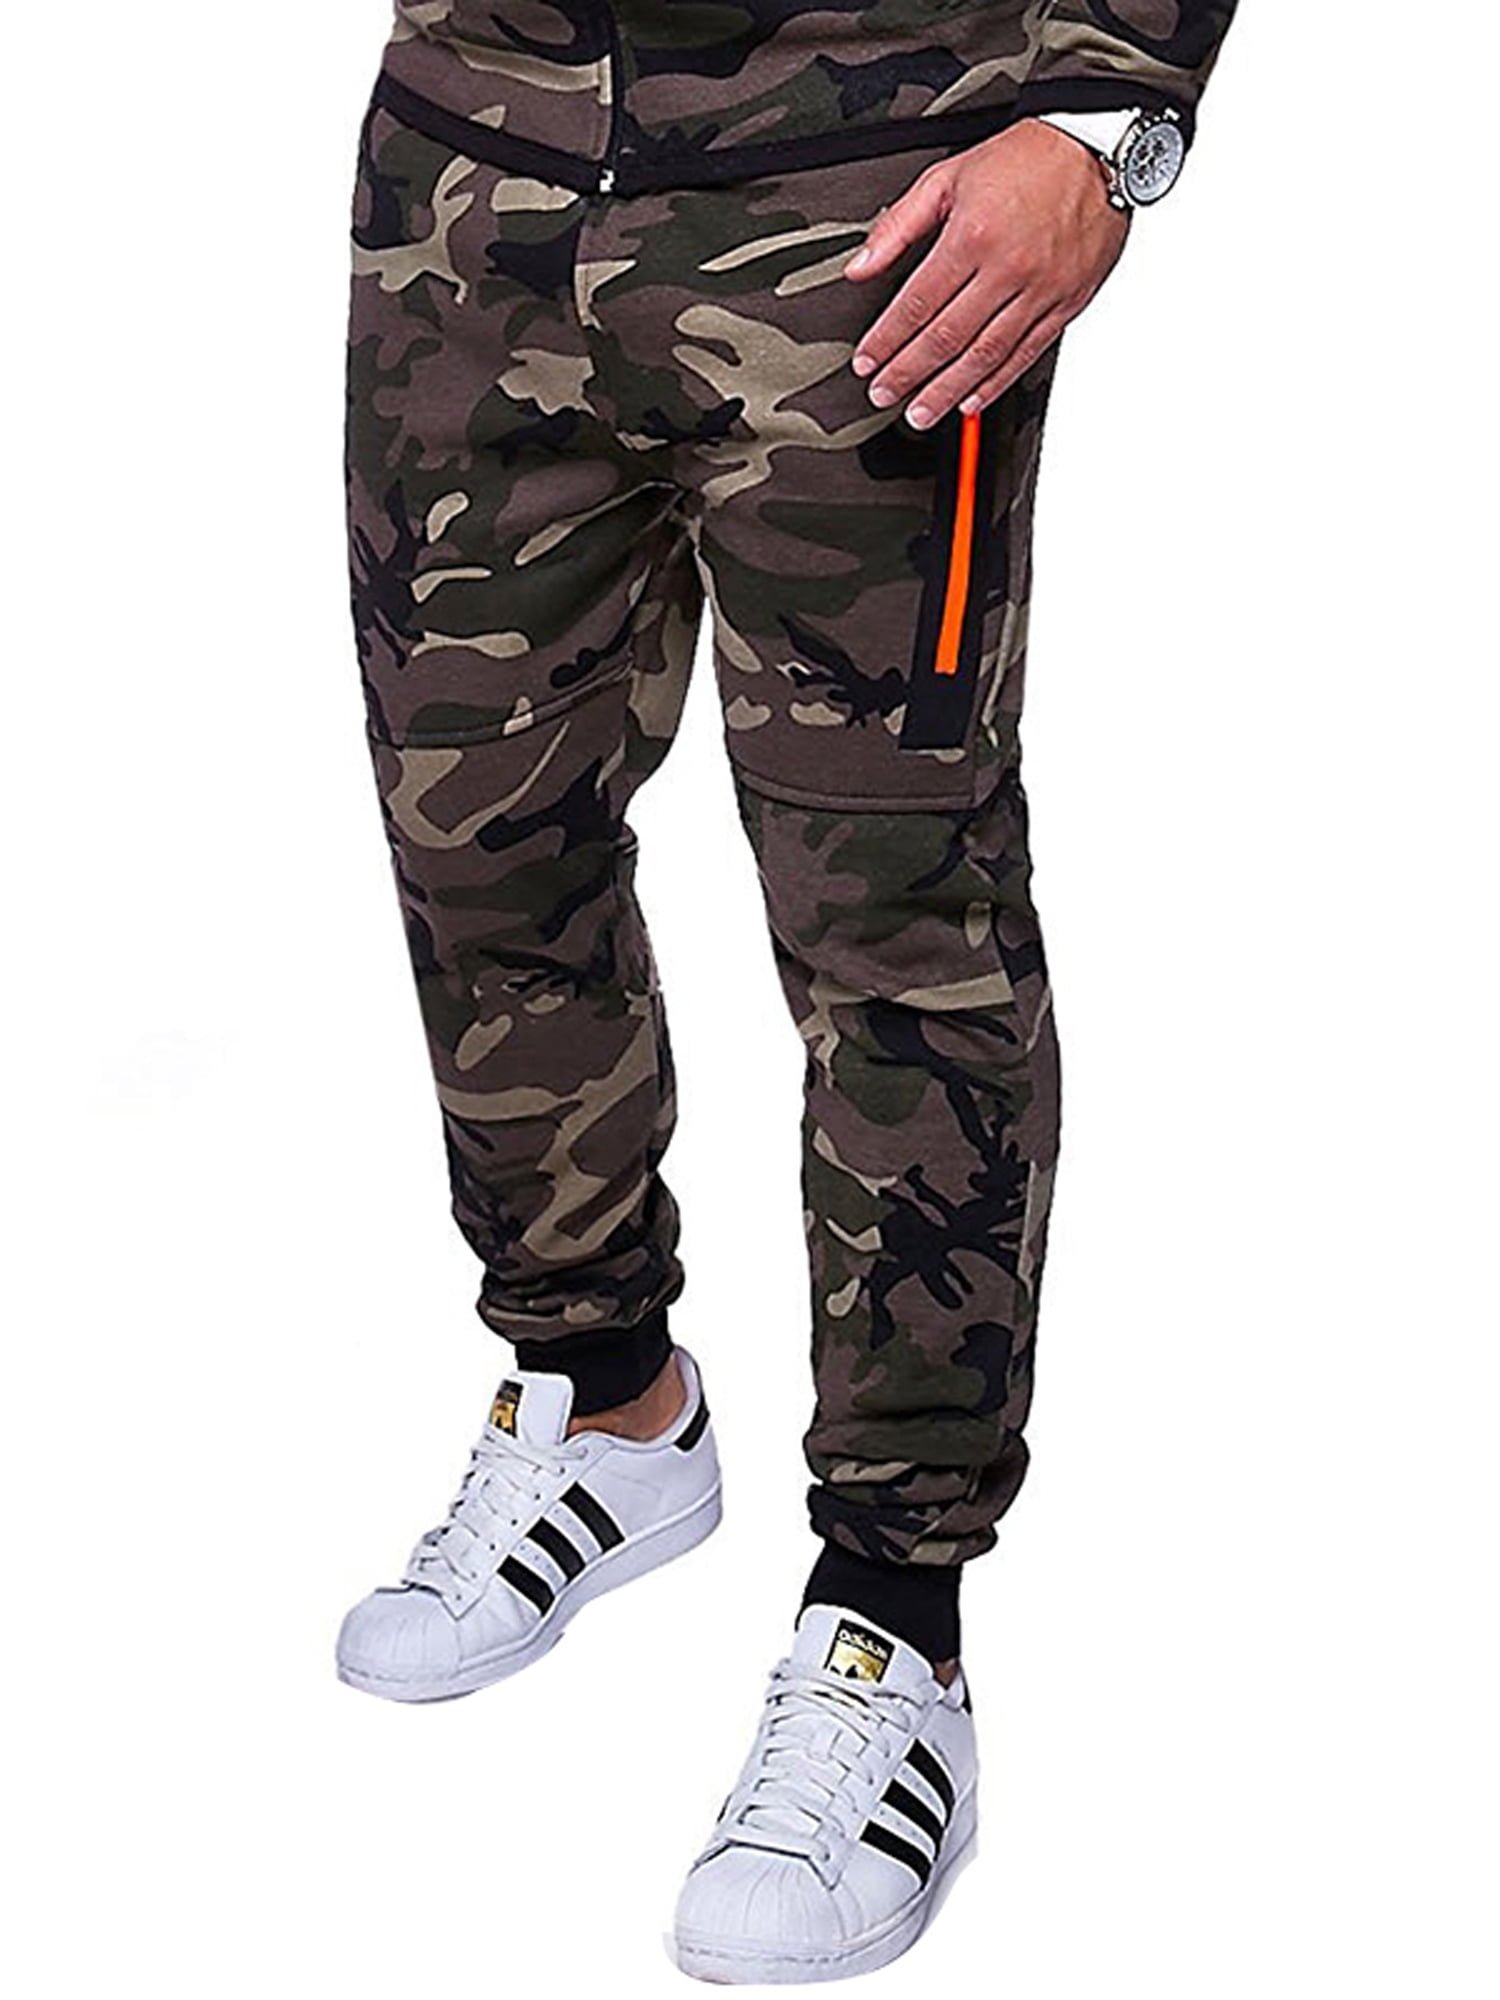 Mens Camoflage Trousers Fit Sports Jogging Sports Sweatpants Pockets Gym Pants 